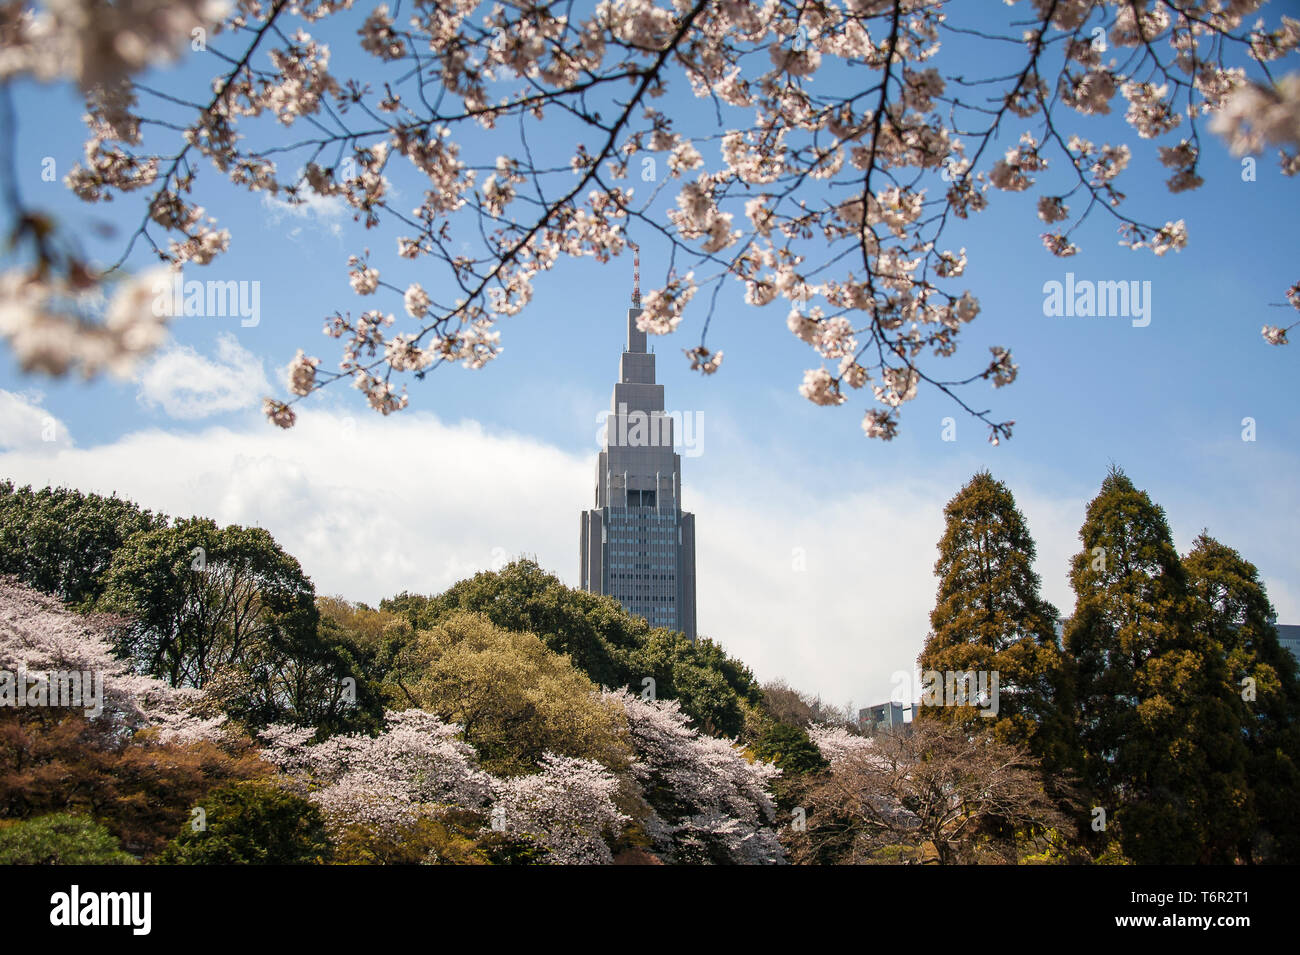 Shinjuku Gyoen National Garden with Cherry Blossom, the NTT Docomo Yoyogi Building in background and blue, cloudy sky Stock Photo